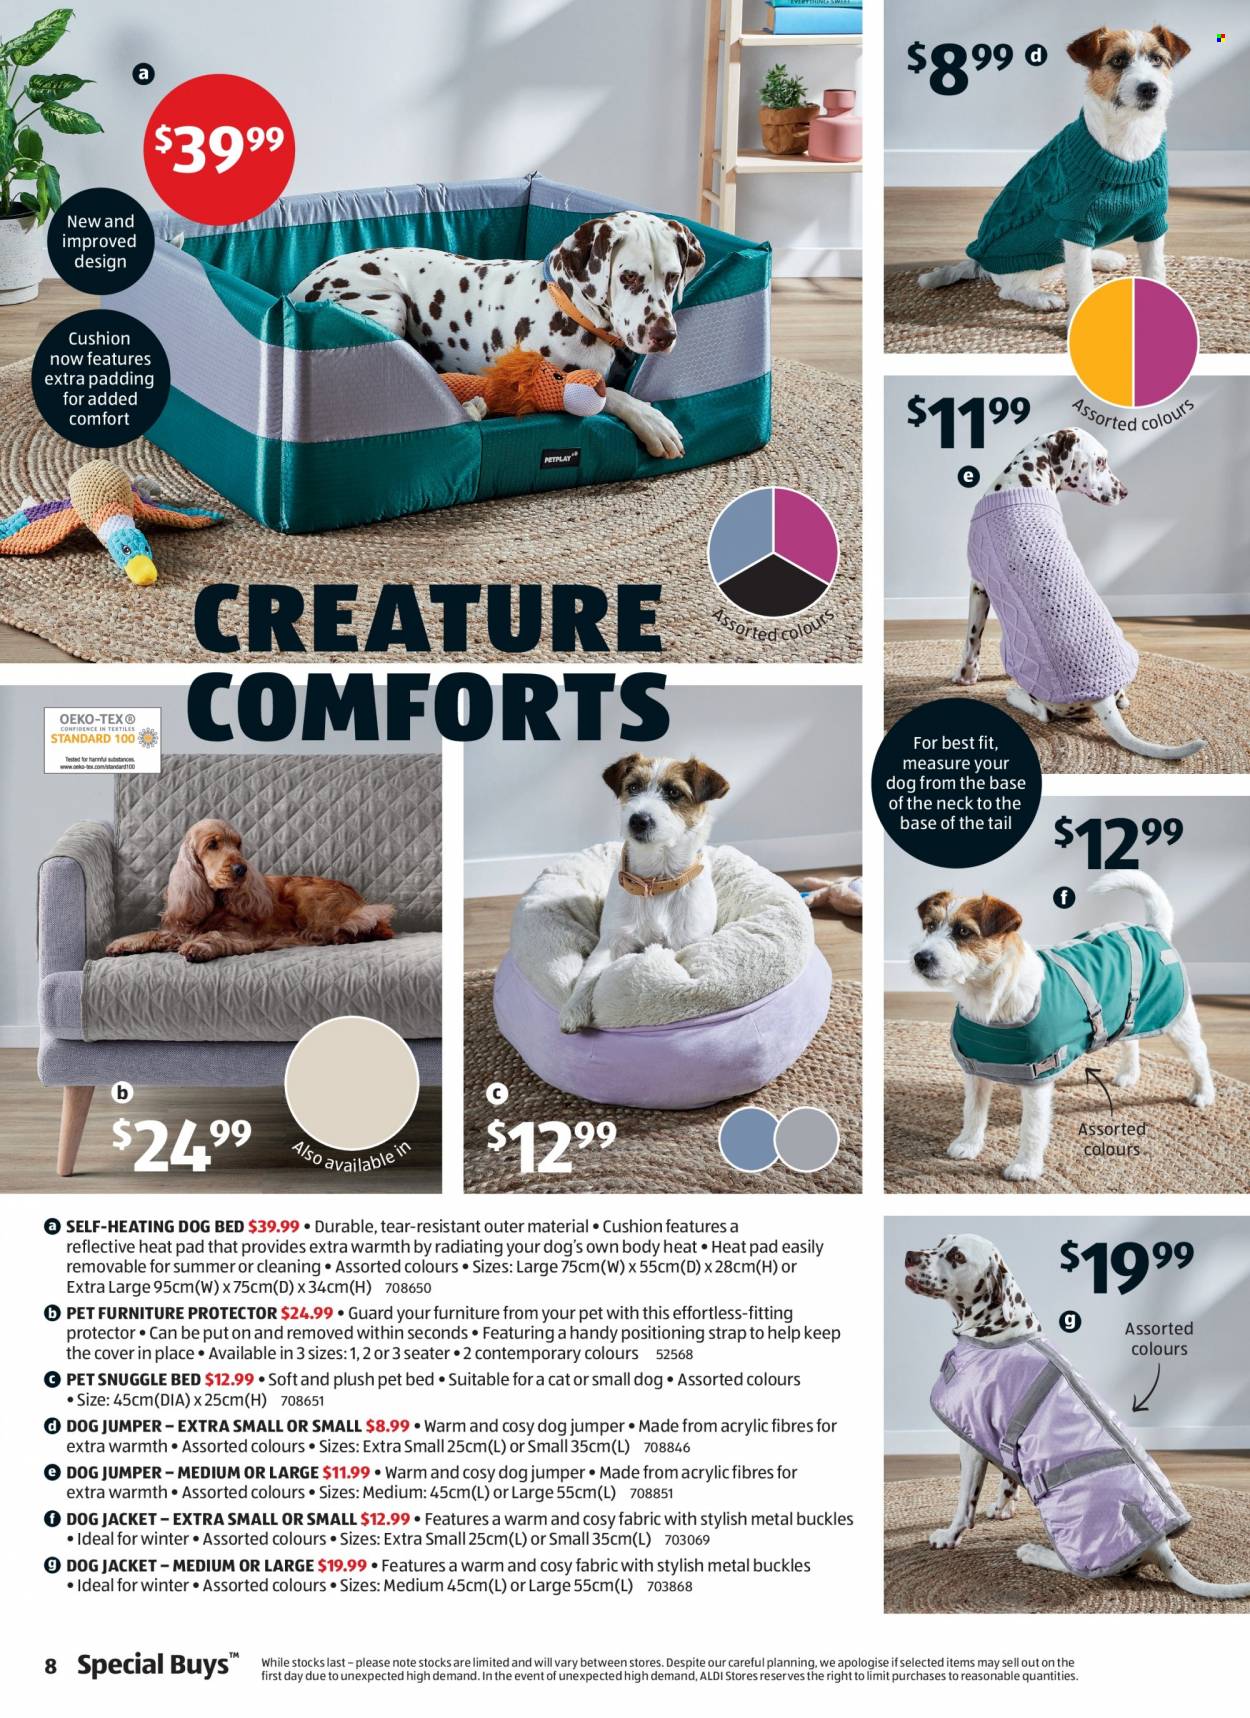 thumbnail - ALDI Catalogue - 11 May 2022 - 17 May 2022 - Sales products - Snuggle, cushion, dog bed, pet bed, jacket, sweater, strap. Page 8.